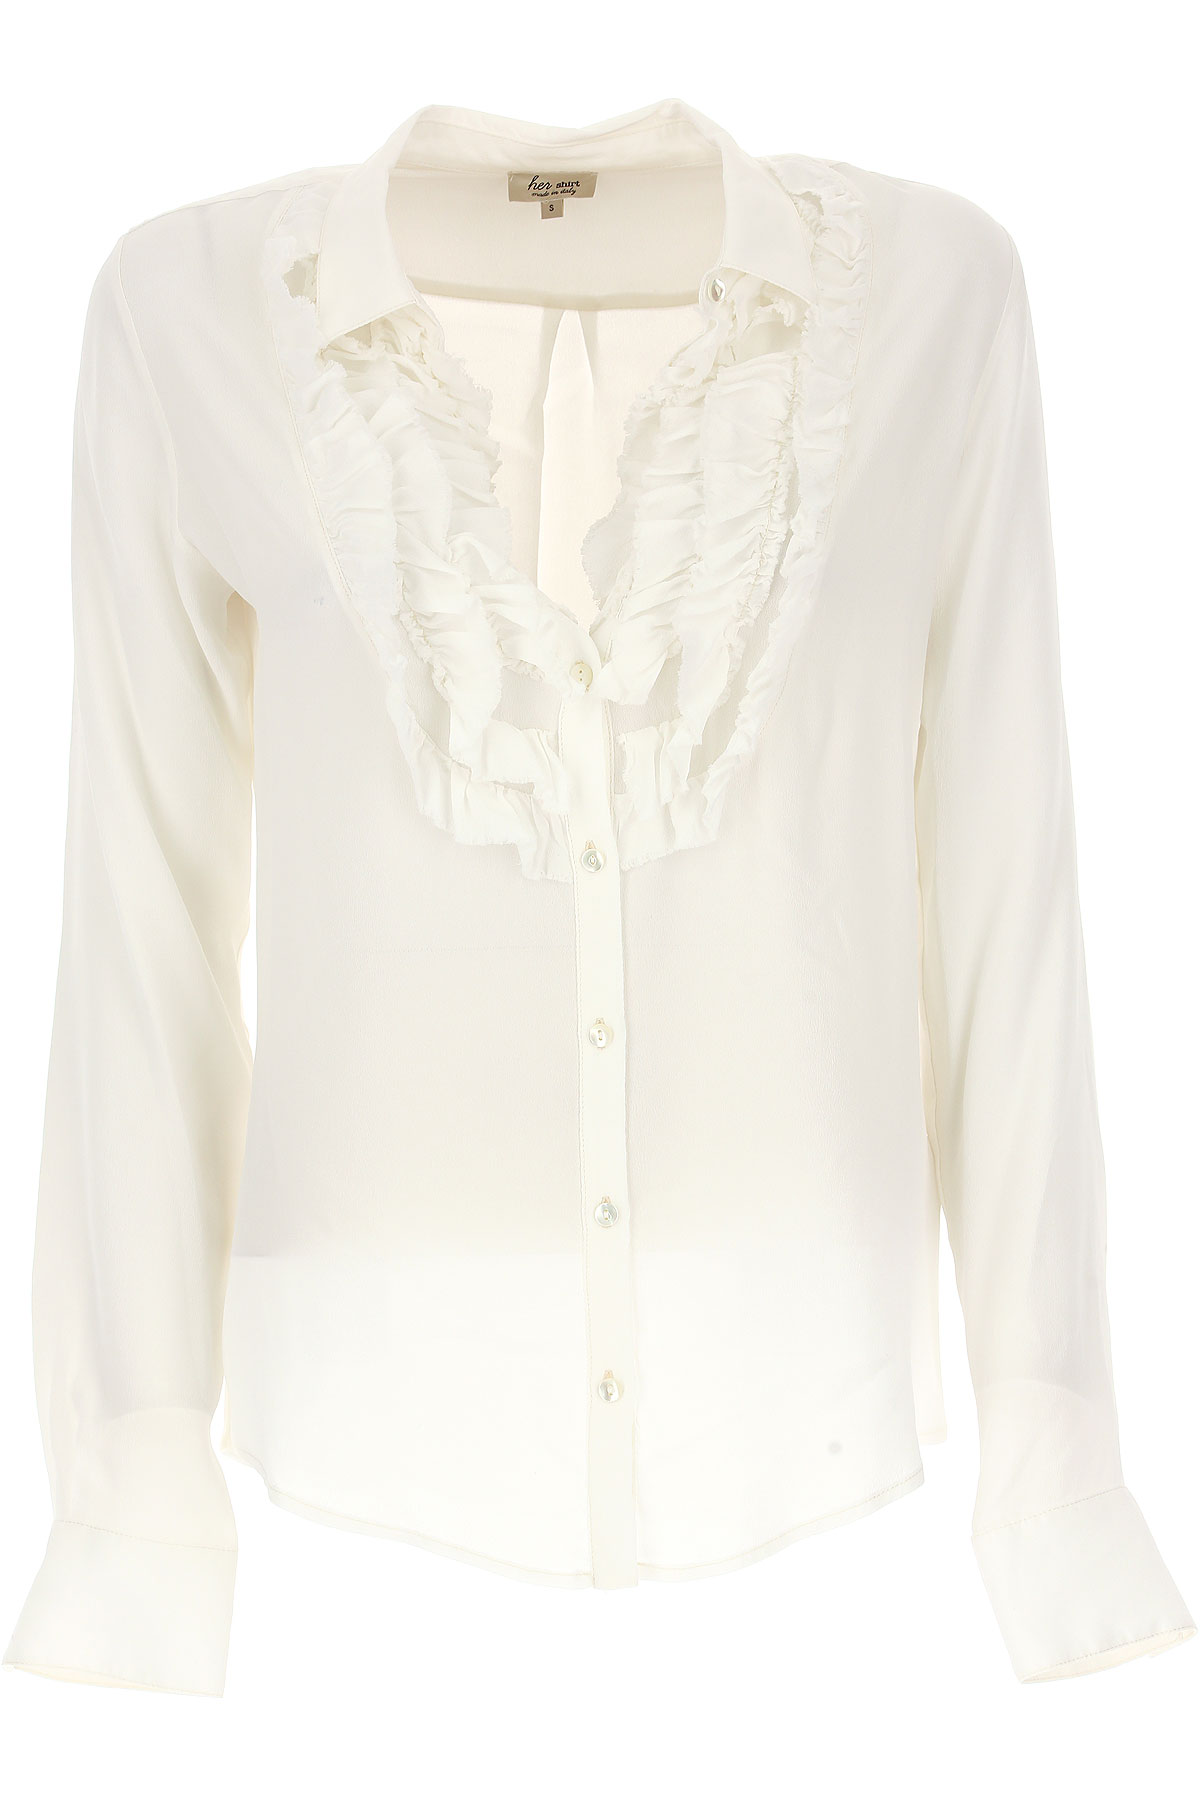 Her Shirt Chemise Femme , Blanc, Viscose, 2017, 40 42